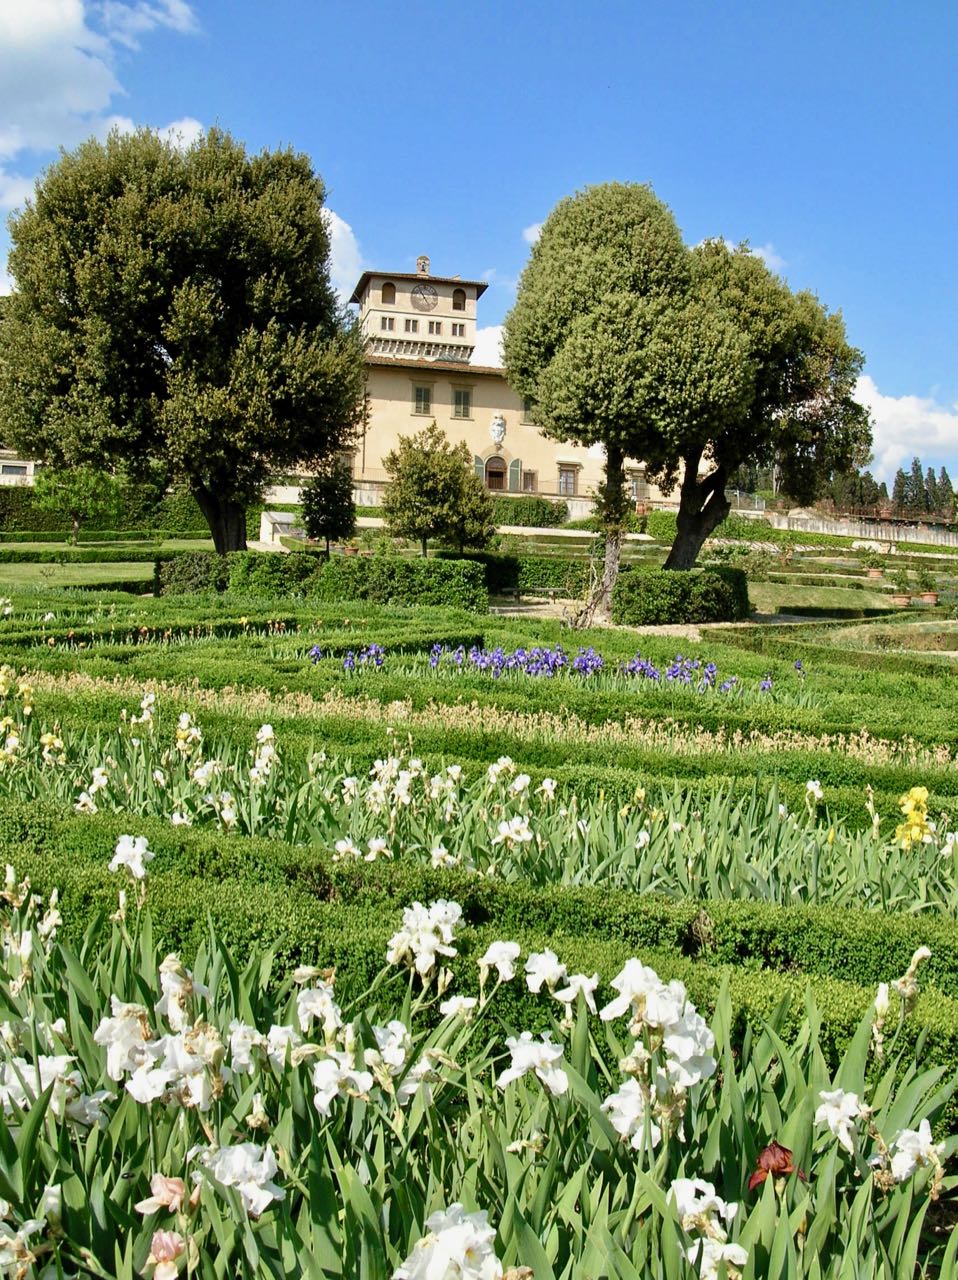 Iris in Tuscany